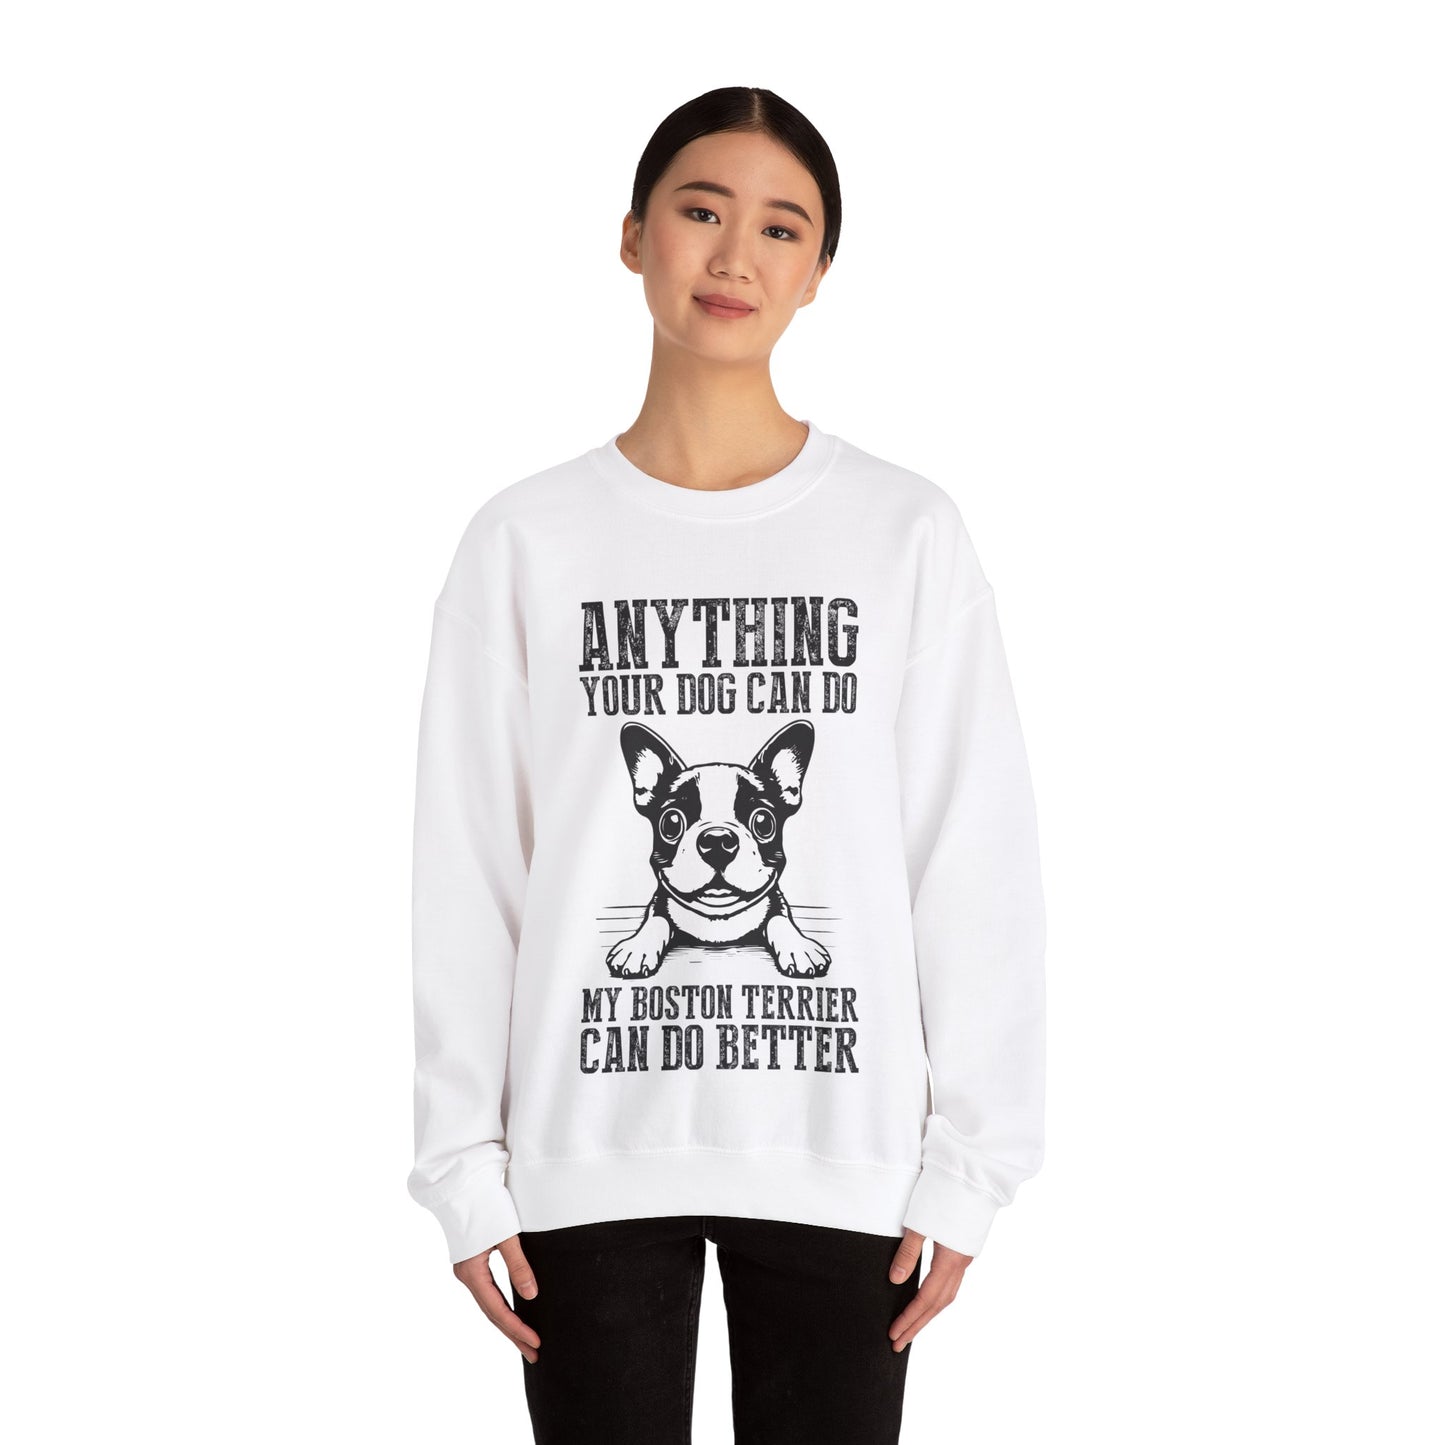 Lucy - Unisex Sweatshirt for Boston Terrier lovers